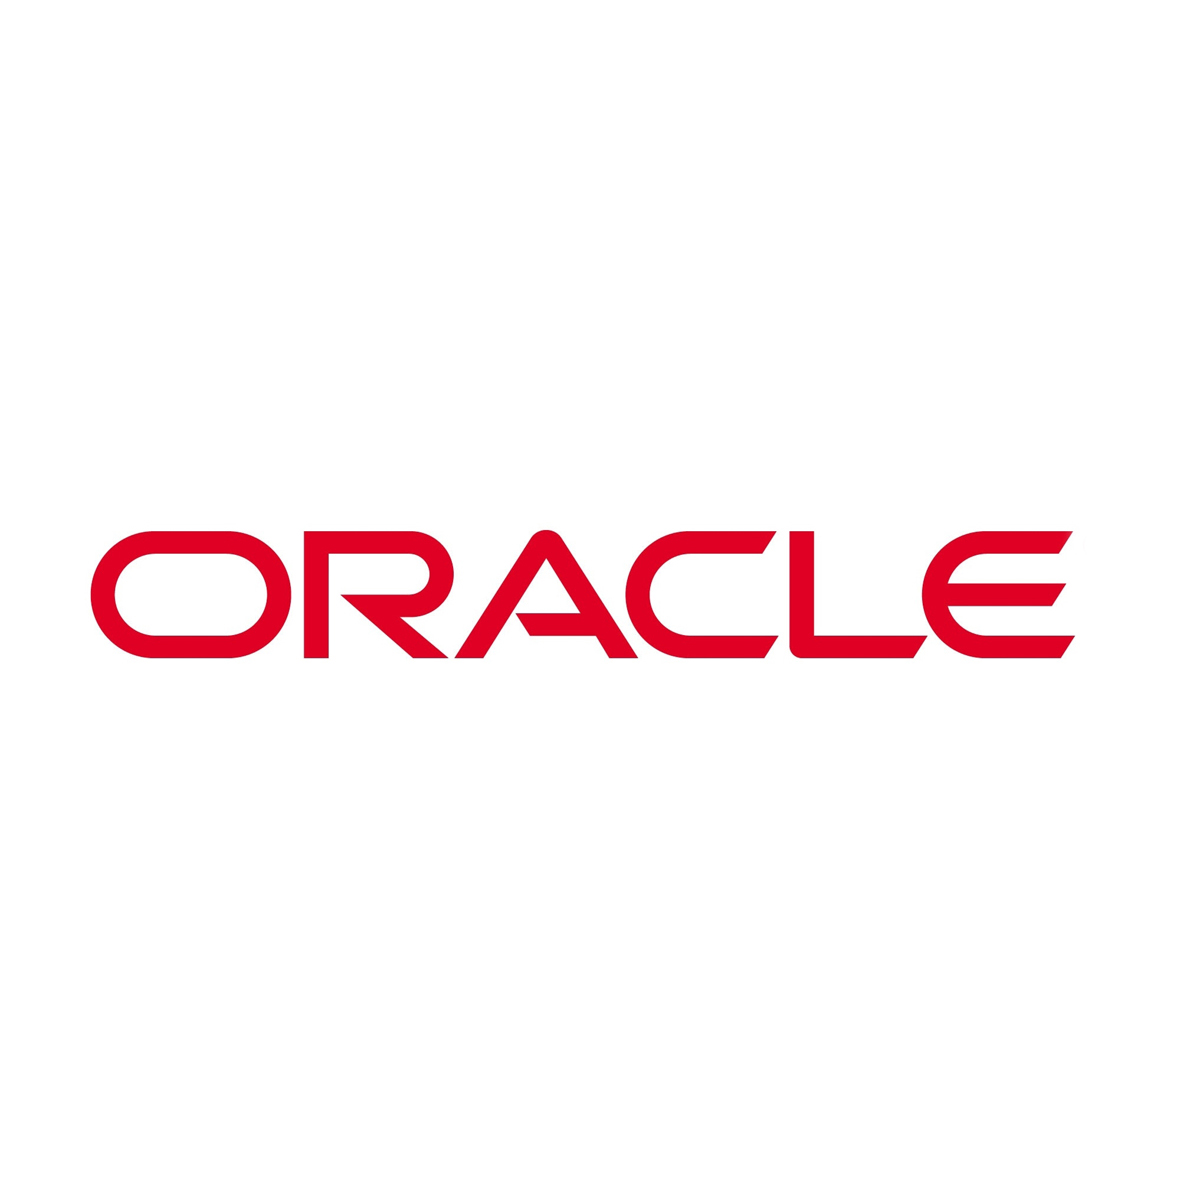  Top Enterprise CRM Software Logo: Oracle